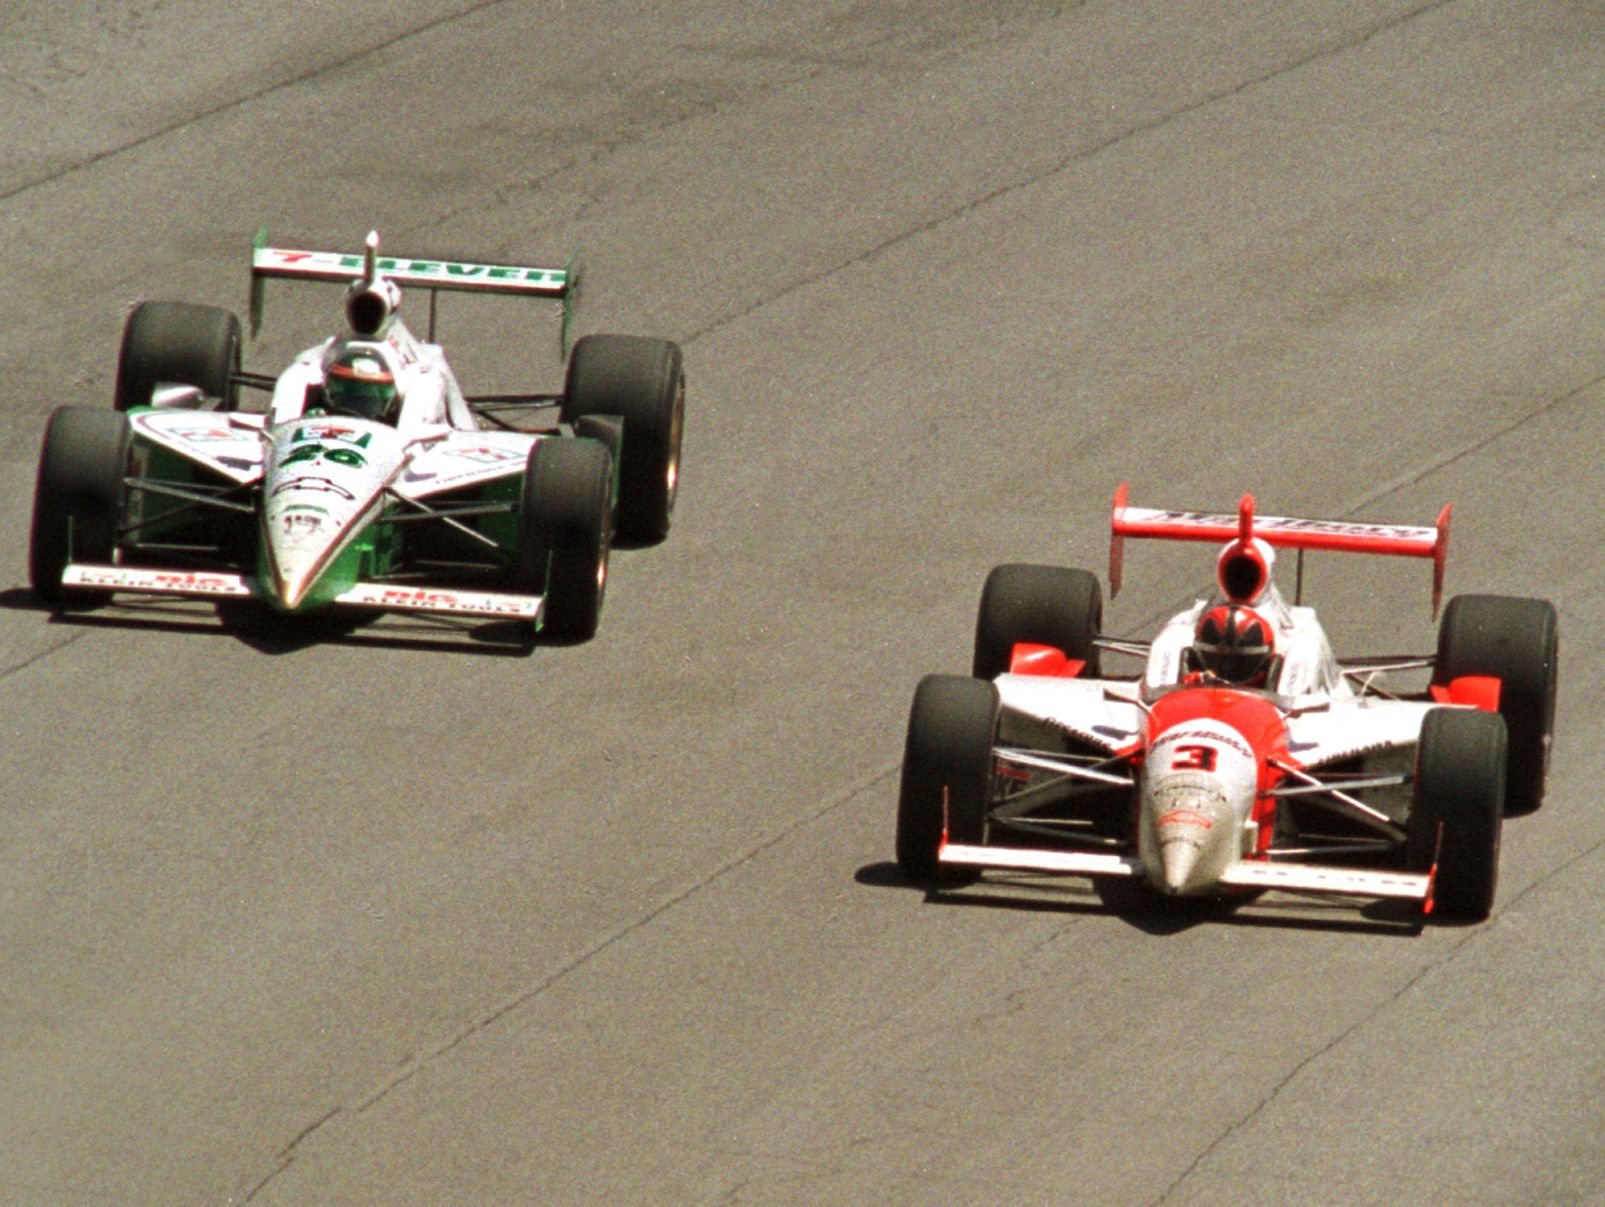 Sporný průjezd...(zleva doprava) Paul Tracy ve voze číslo 26 předjíždí (zvenčí) číslo 3, Helio Castroneves...Na konci závodu.